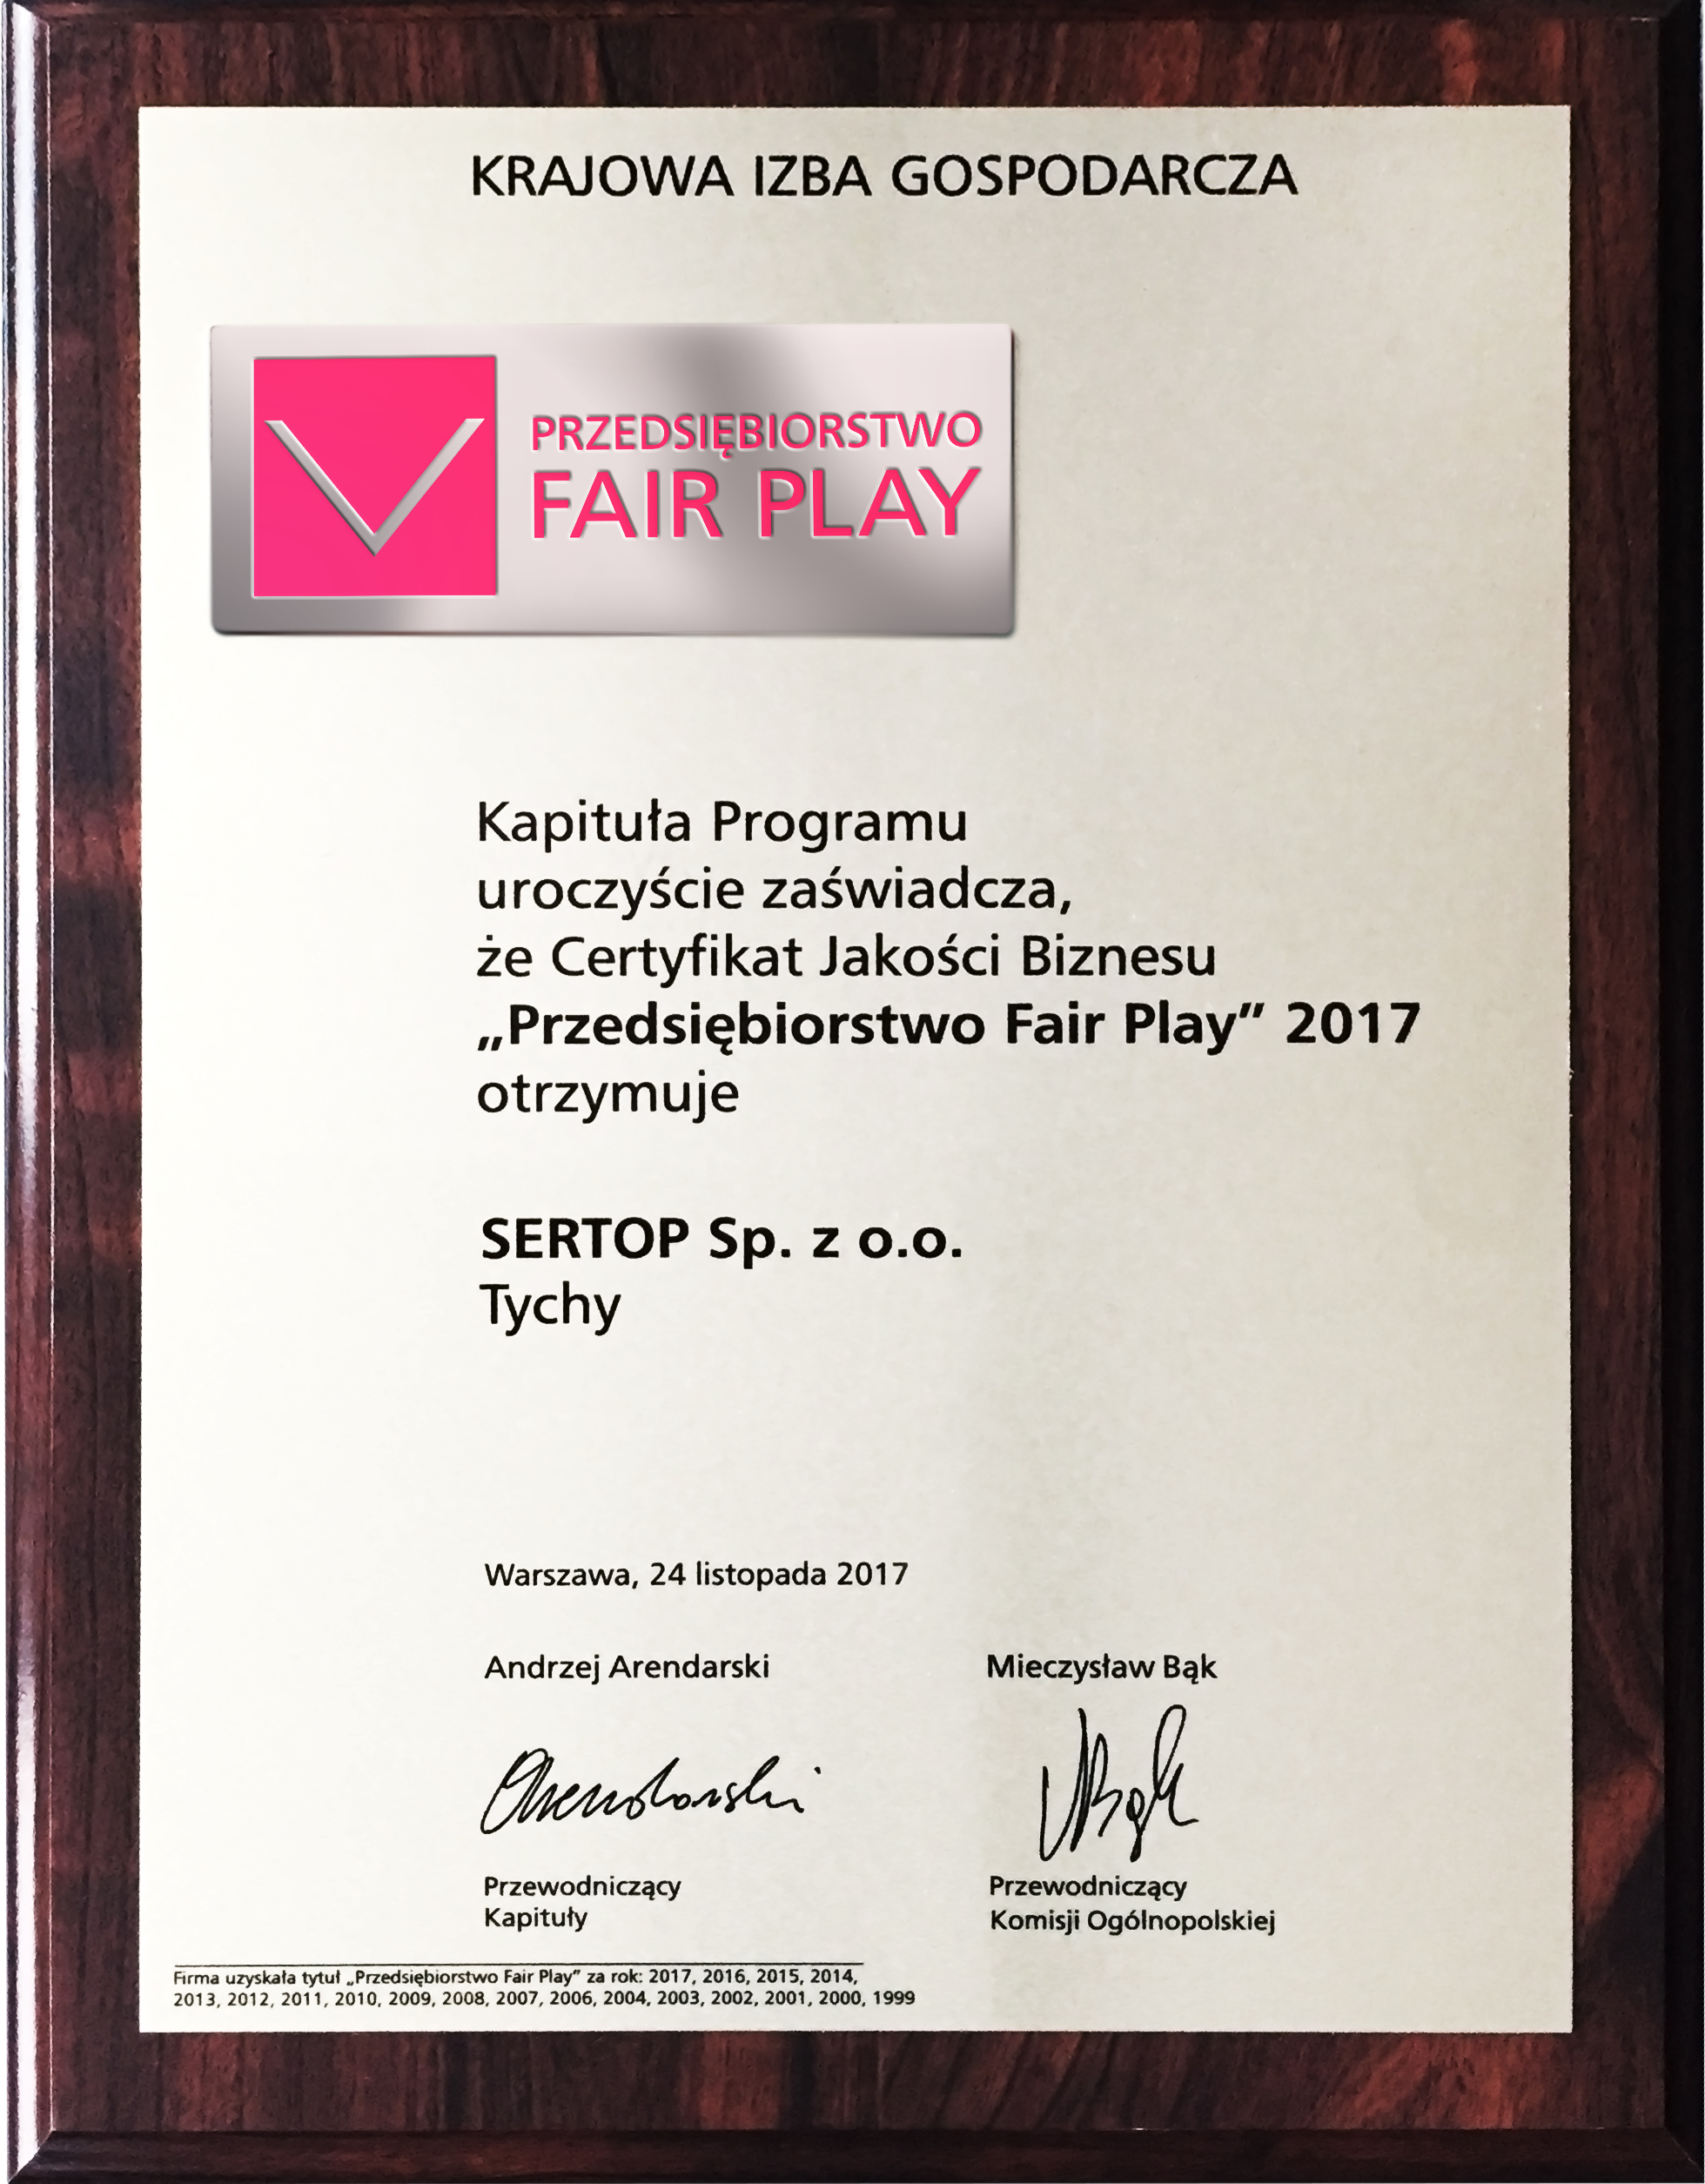 SERTOP – Przedsiębiorstwem Fair Play 2017r.